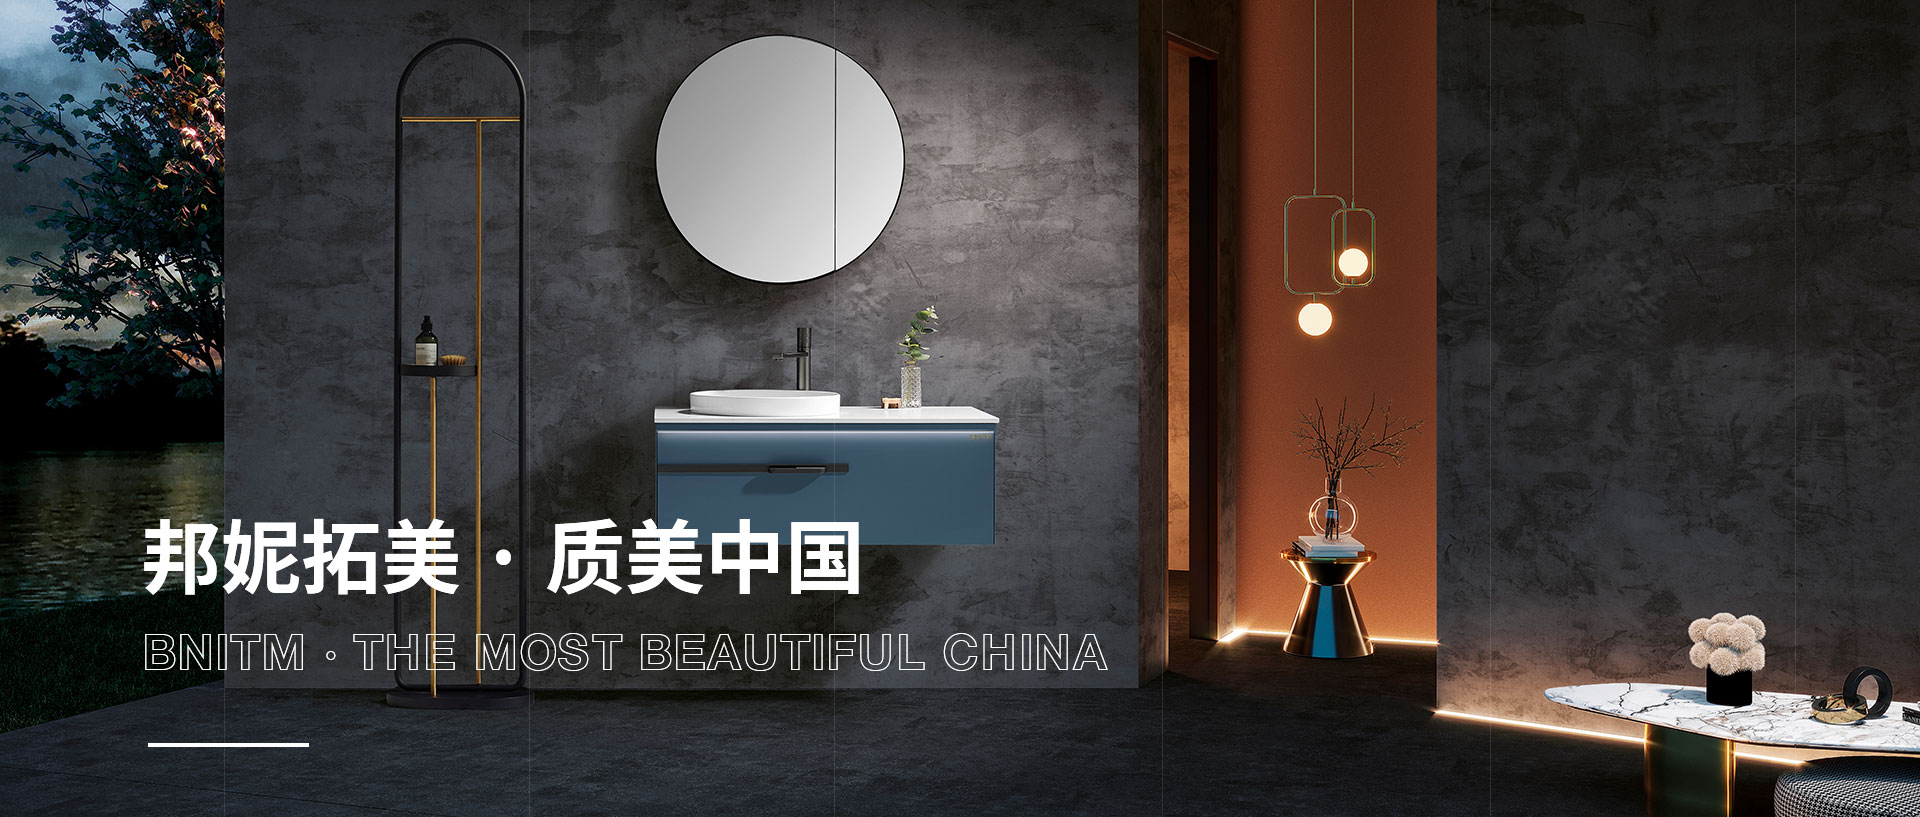 BNITM · The most beautiful China